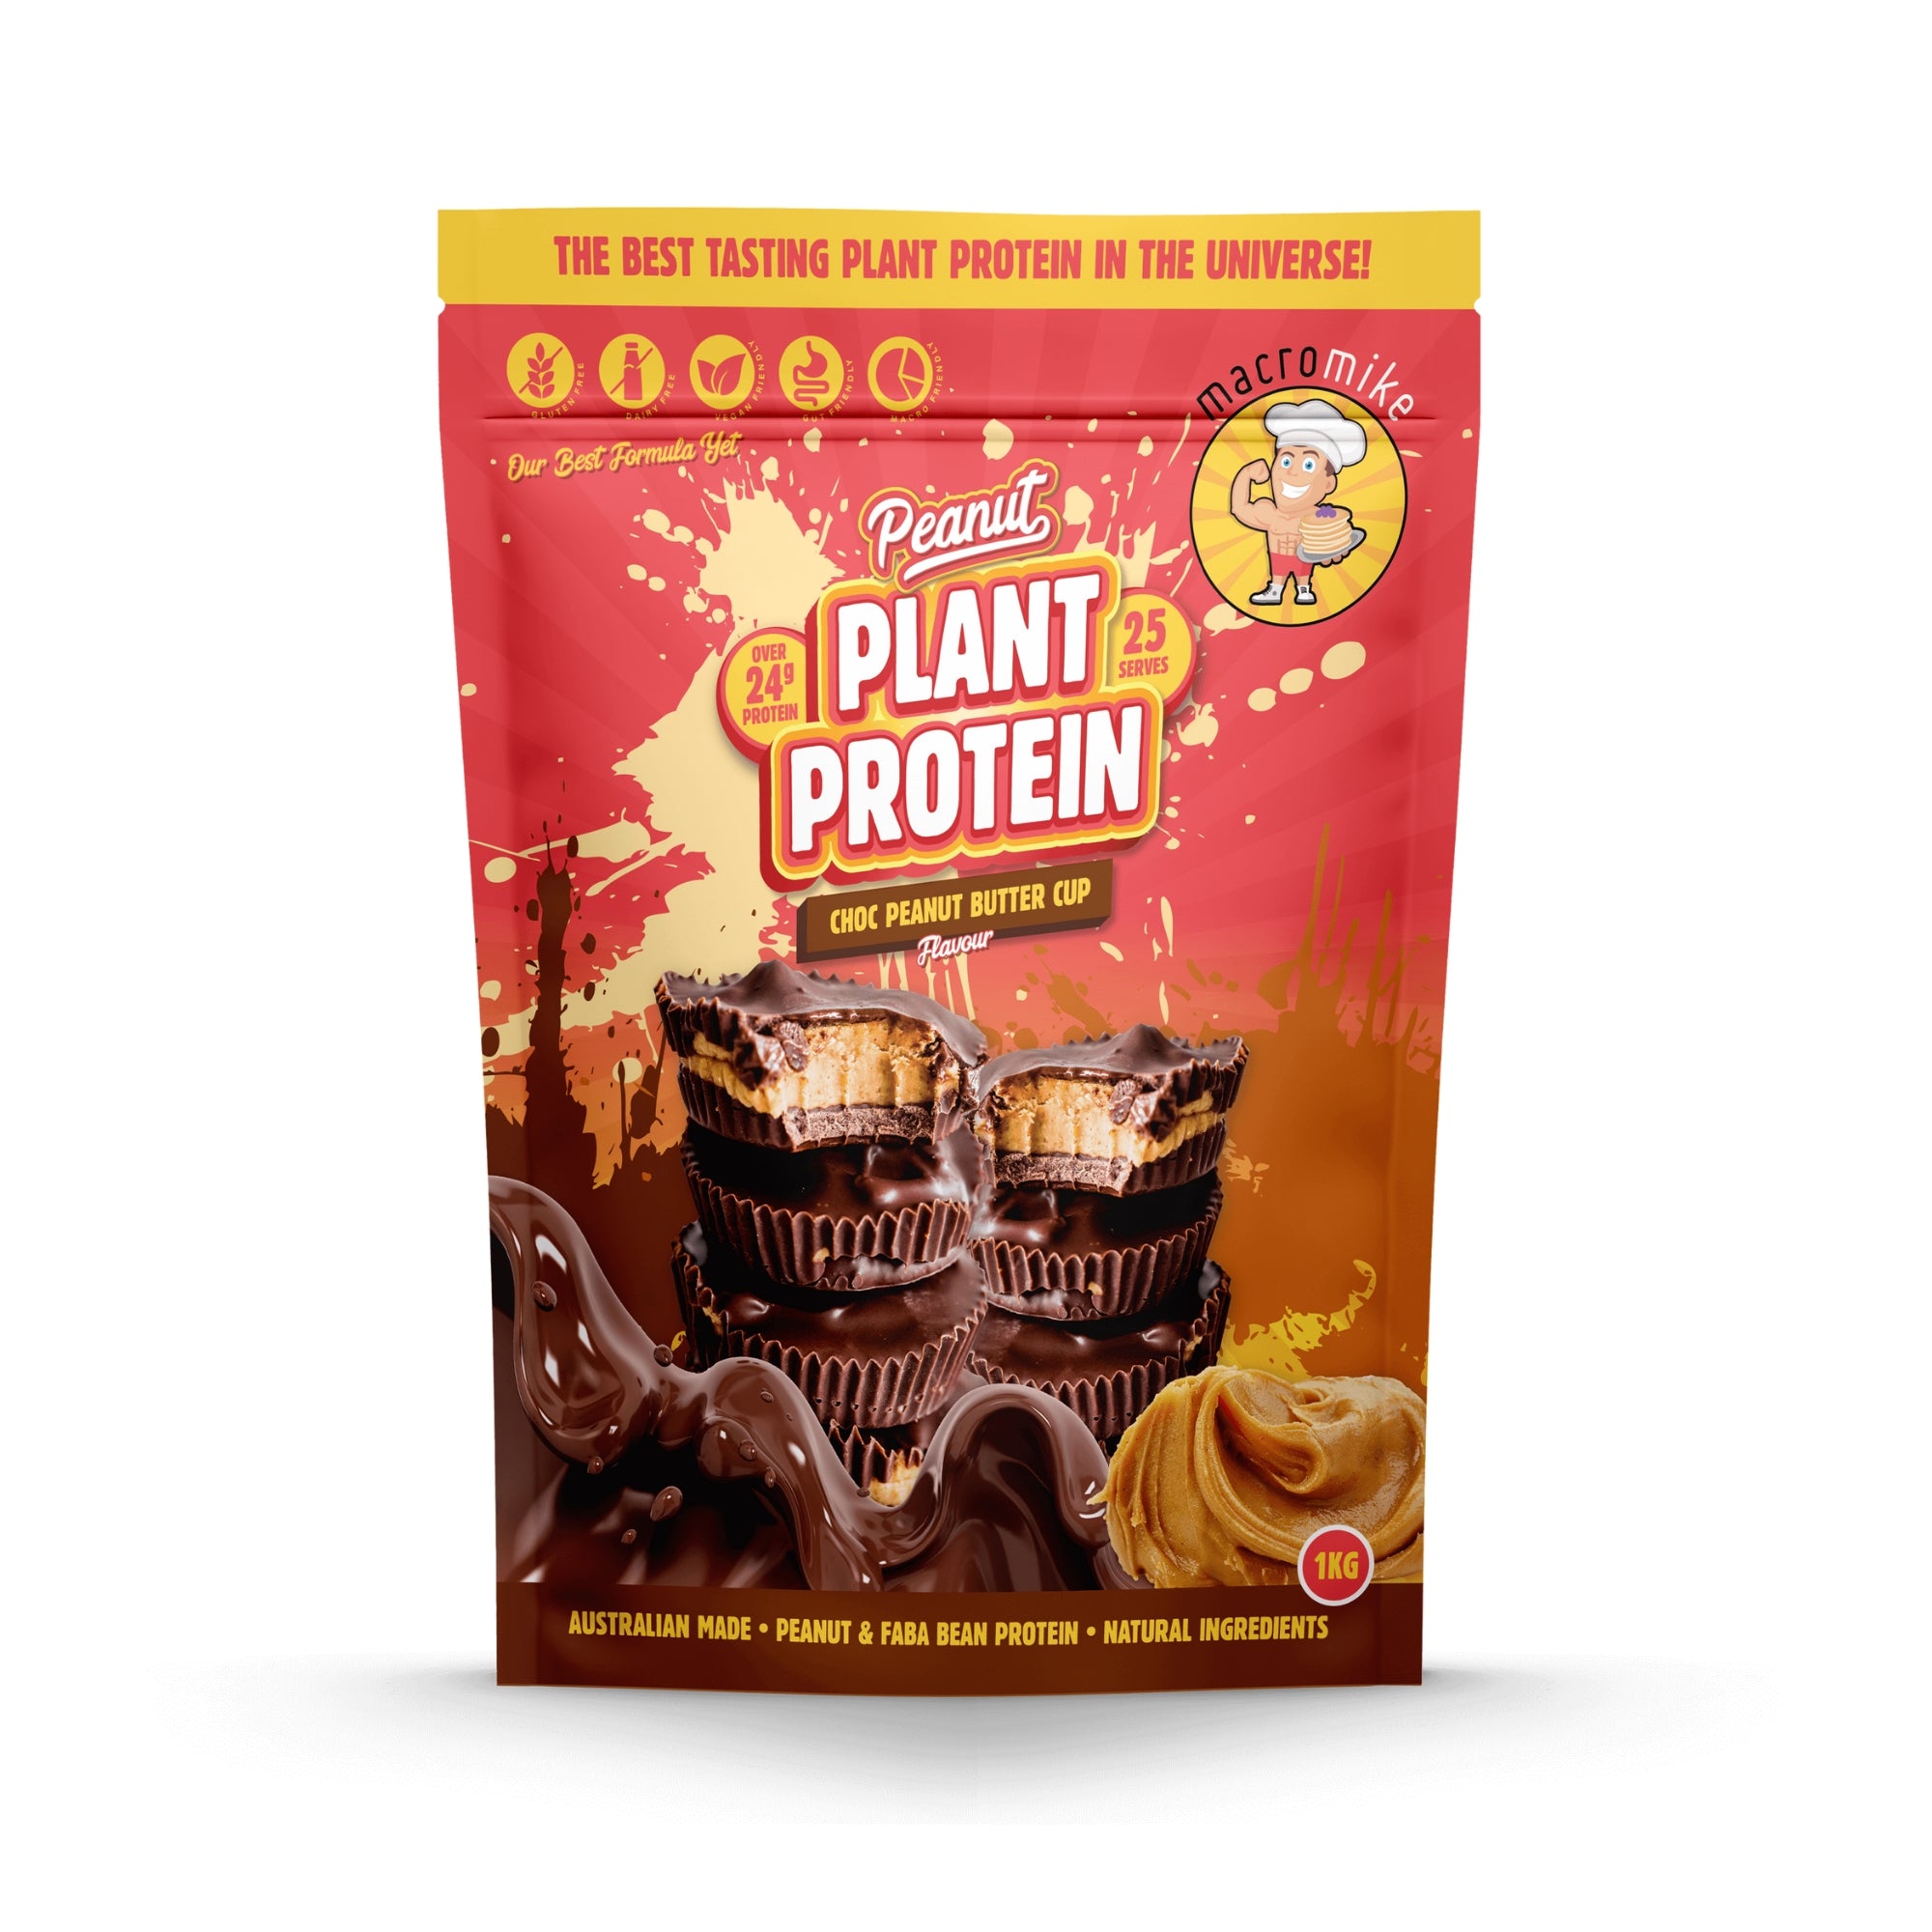 Peanut Plant Protein-Choc Peanut Butter Cup